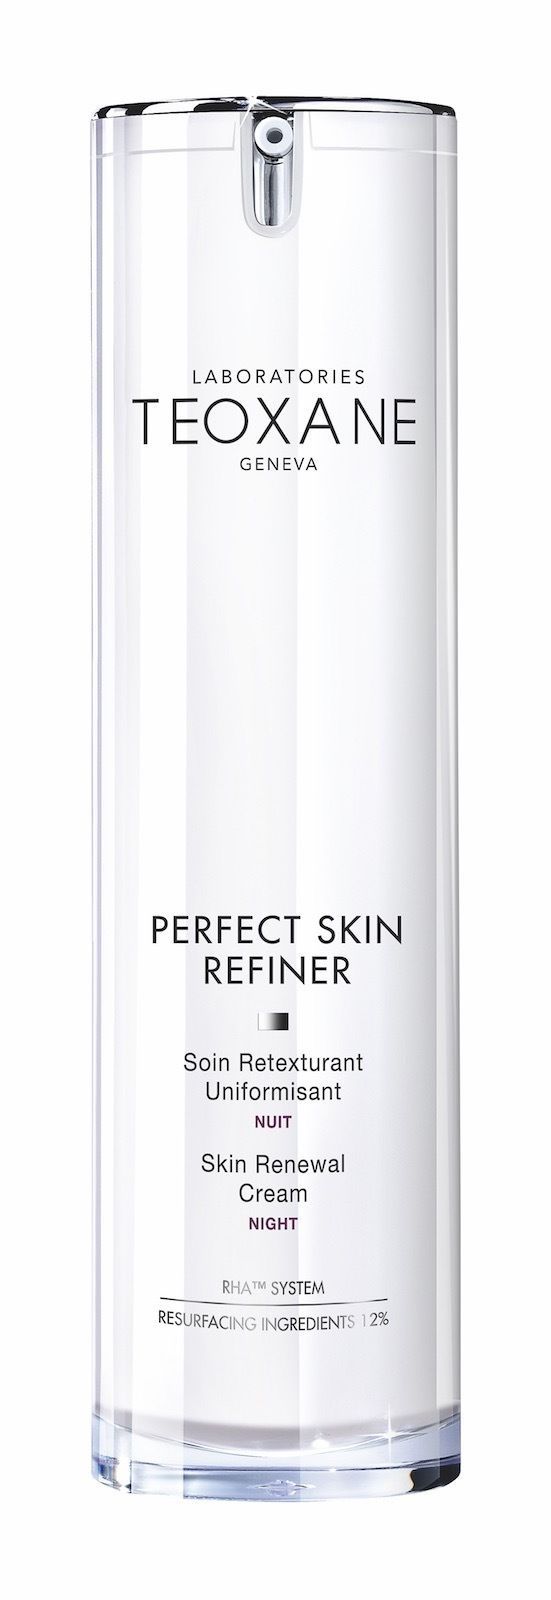 Teoxane Perfect Skin Refiner 50ml - $84.00